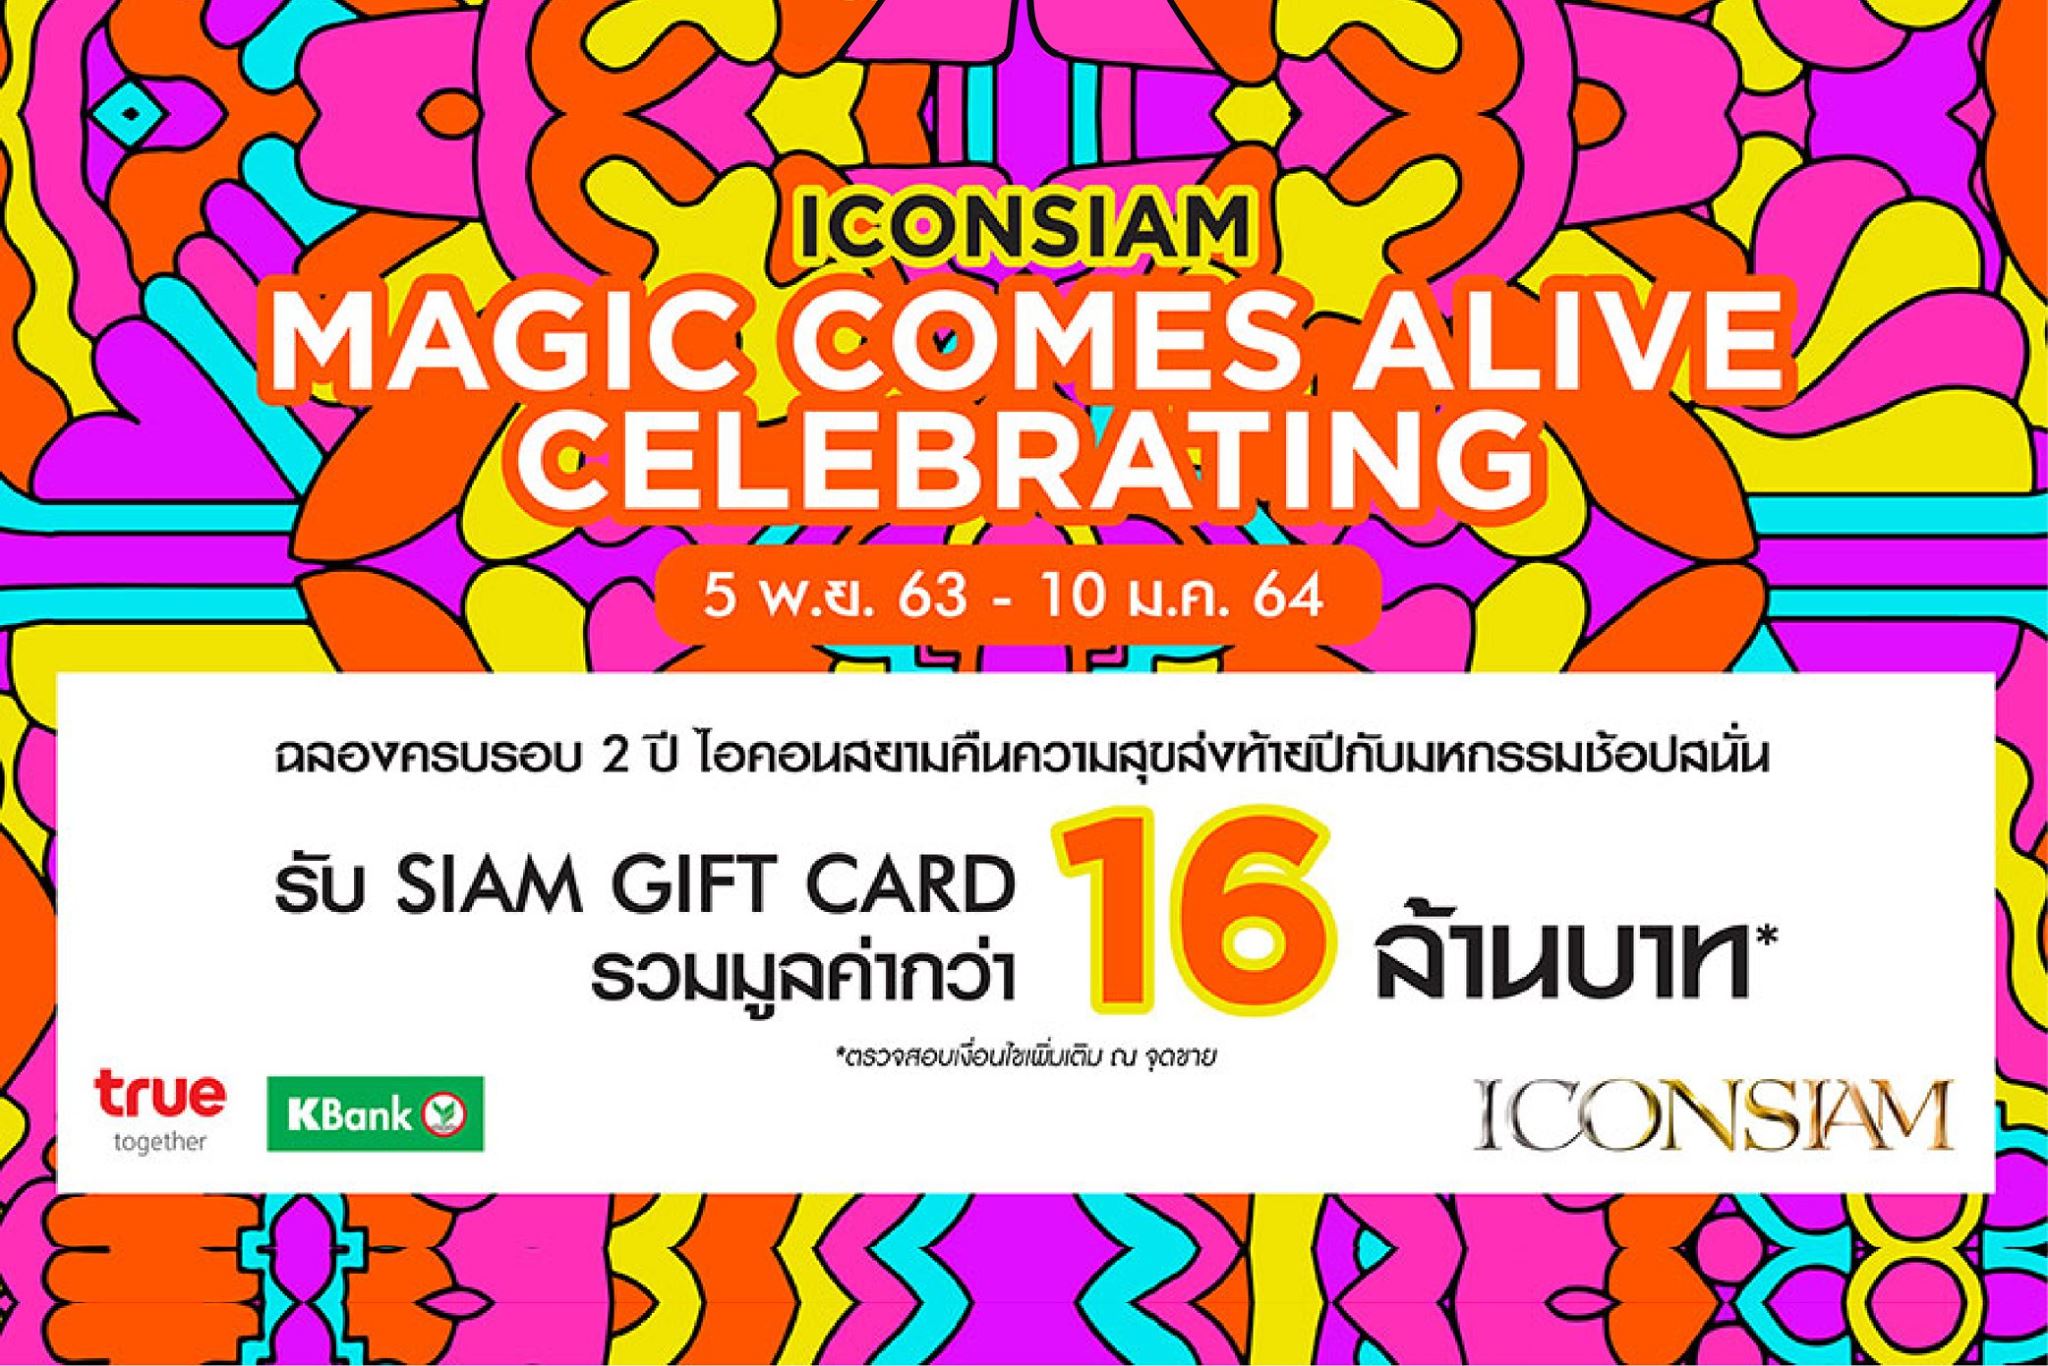 ICONSIAM Magic Comes Alive Celebrating